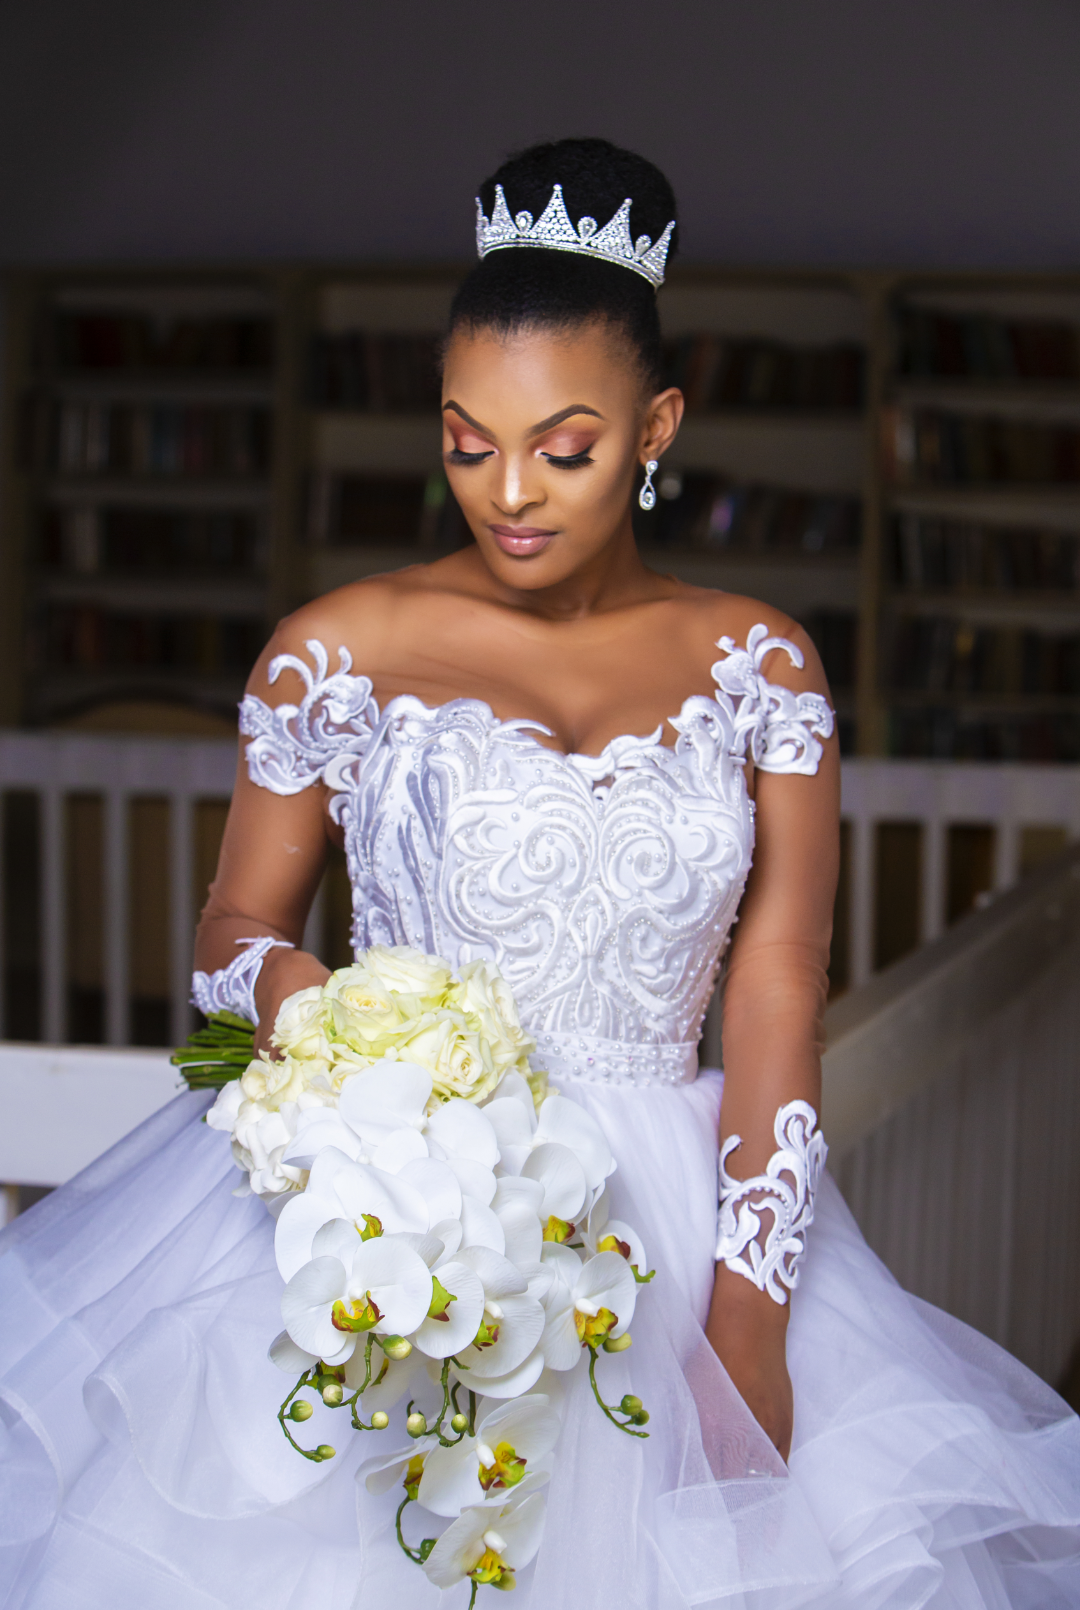 Unique Chiffon 2 In 1 Wedding Dresses Detachable Skirt Two Piece Bride Gown  | eBay